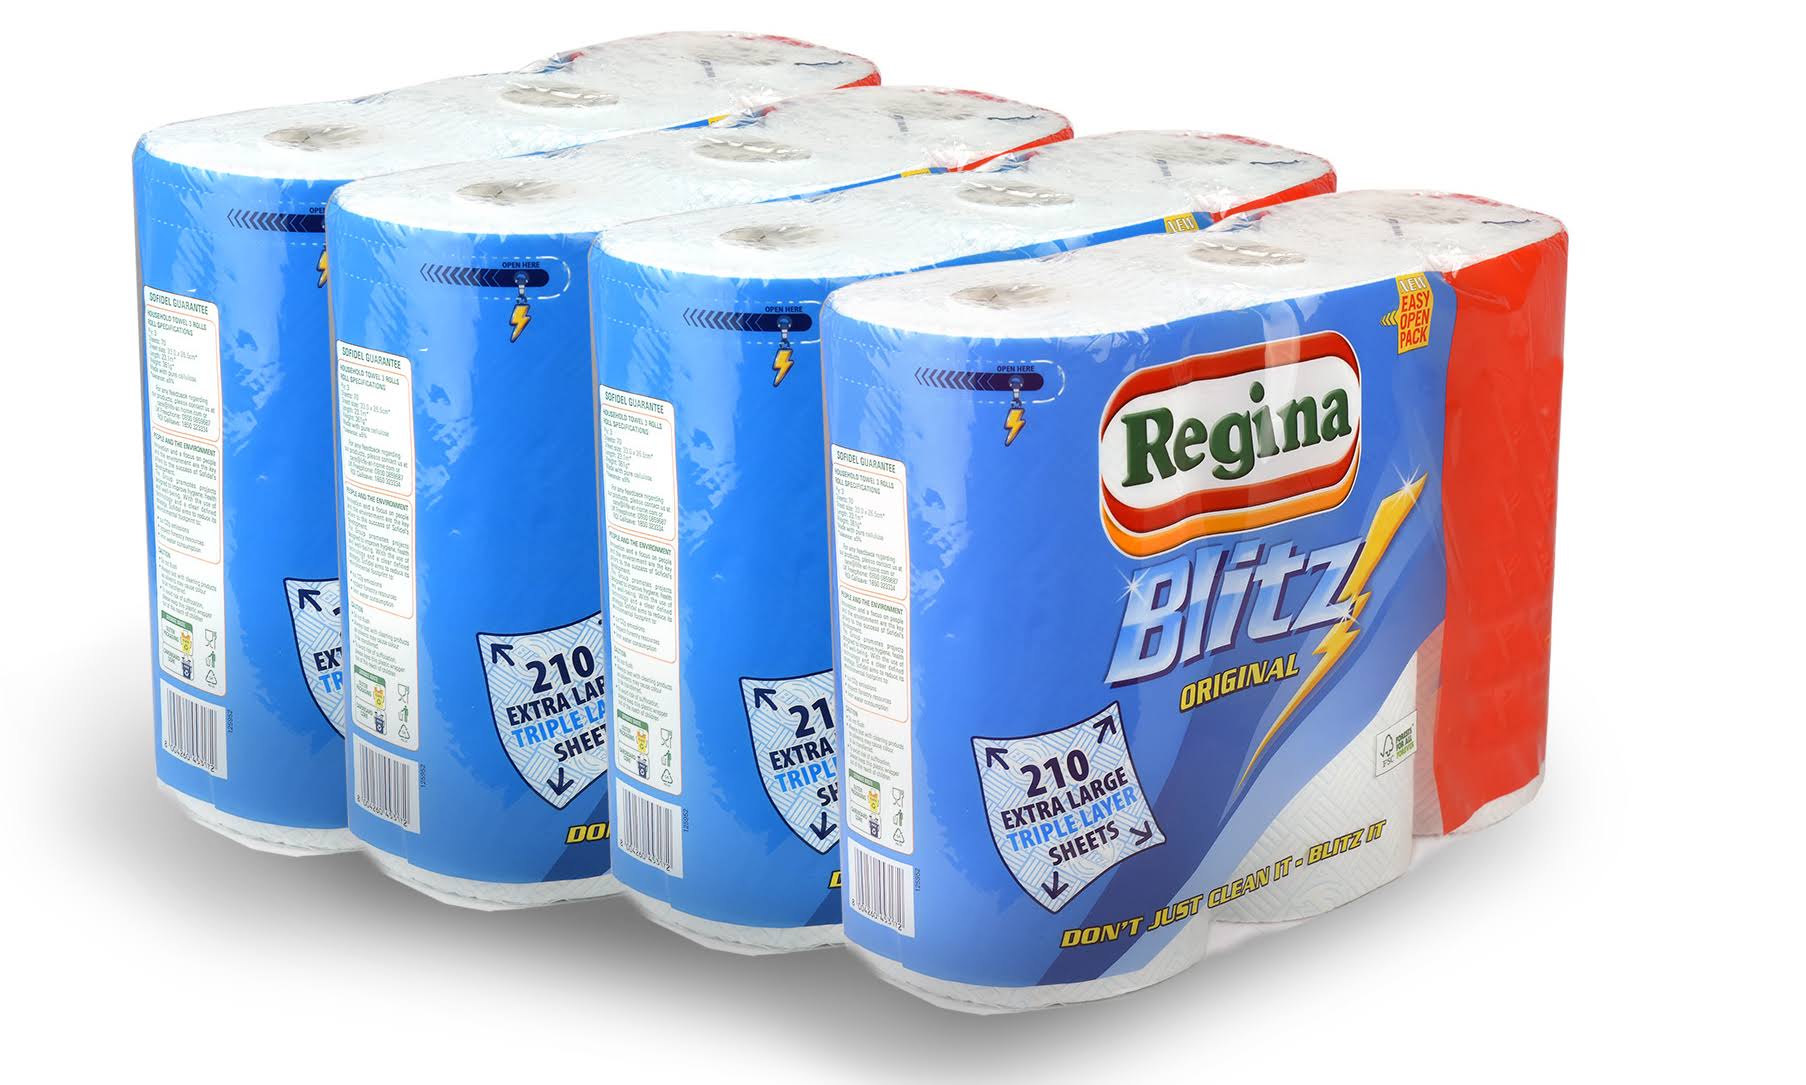 Regina Blitz Original Kitchen Roll - 3 Pack